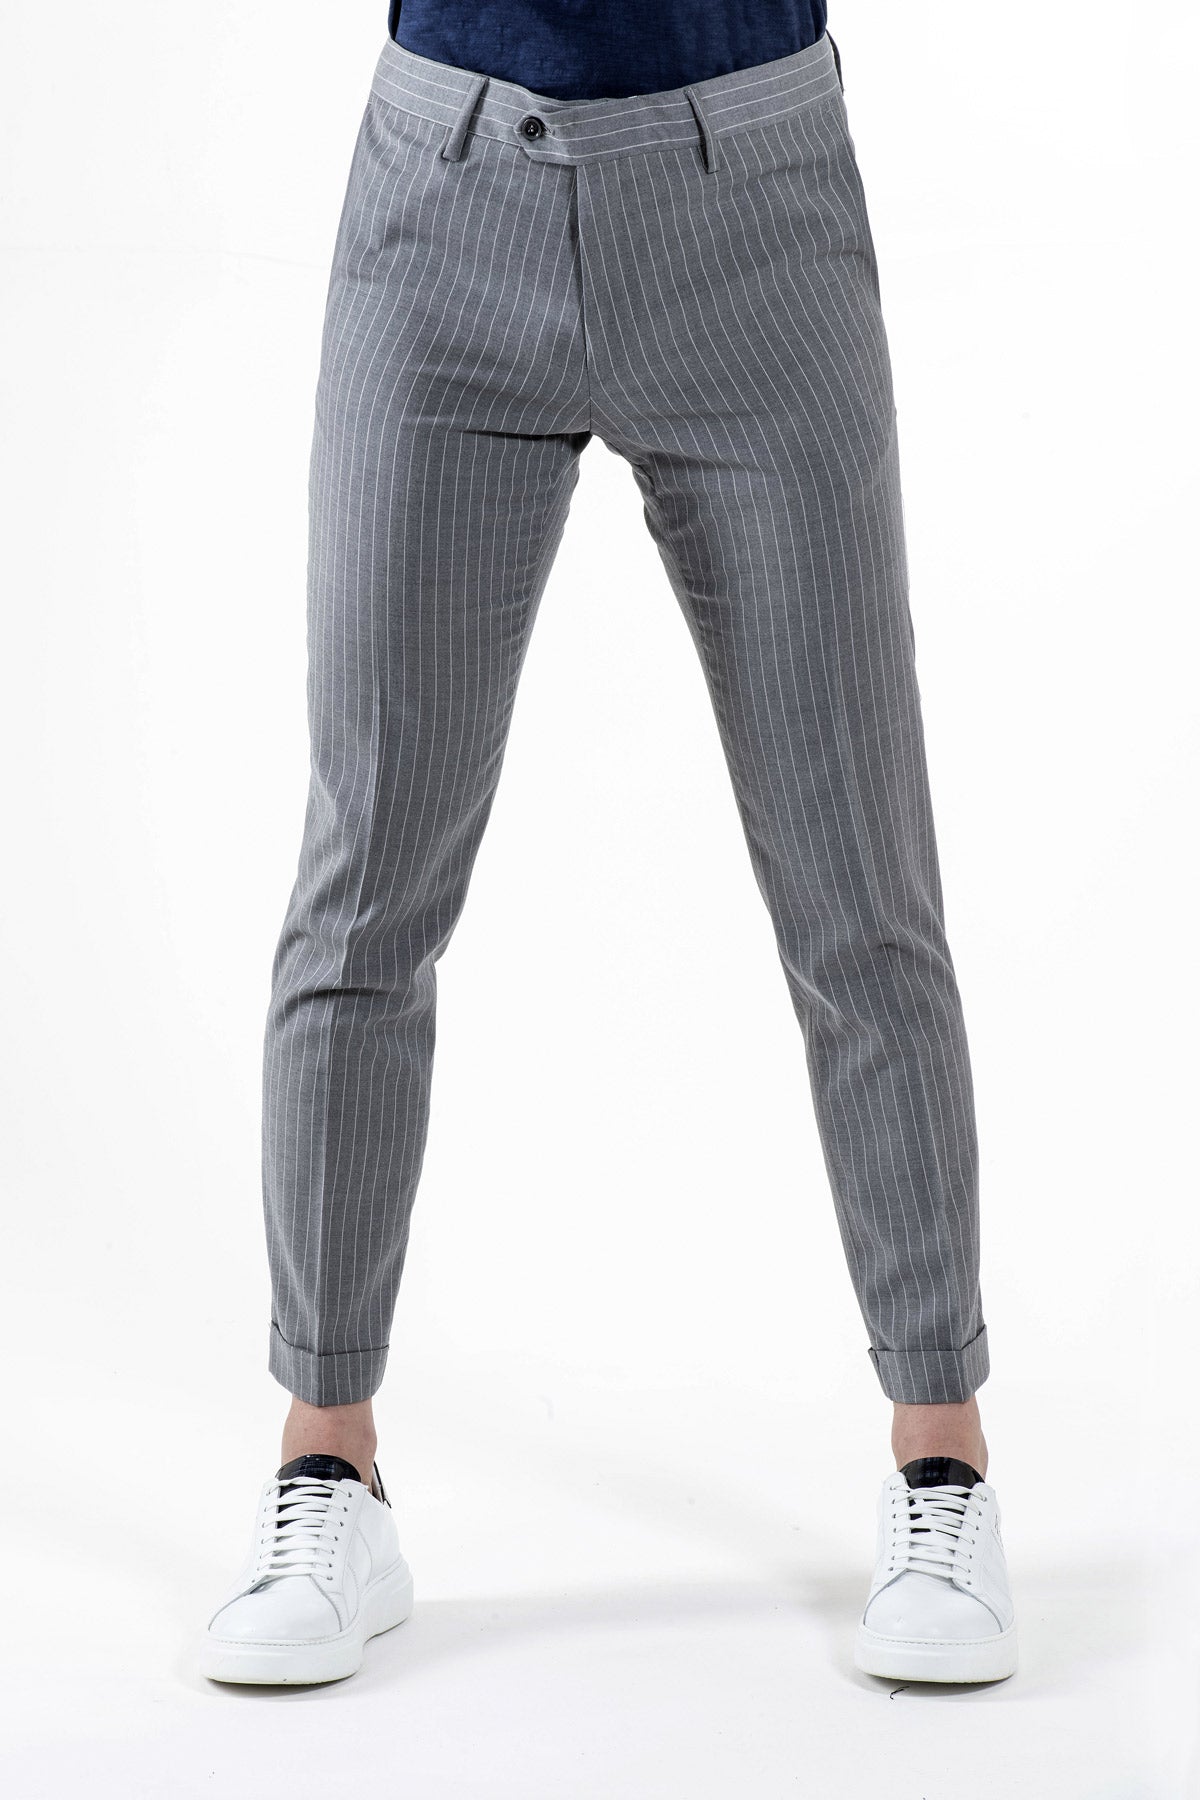 Highgate pinstripe trousers